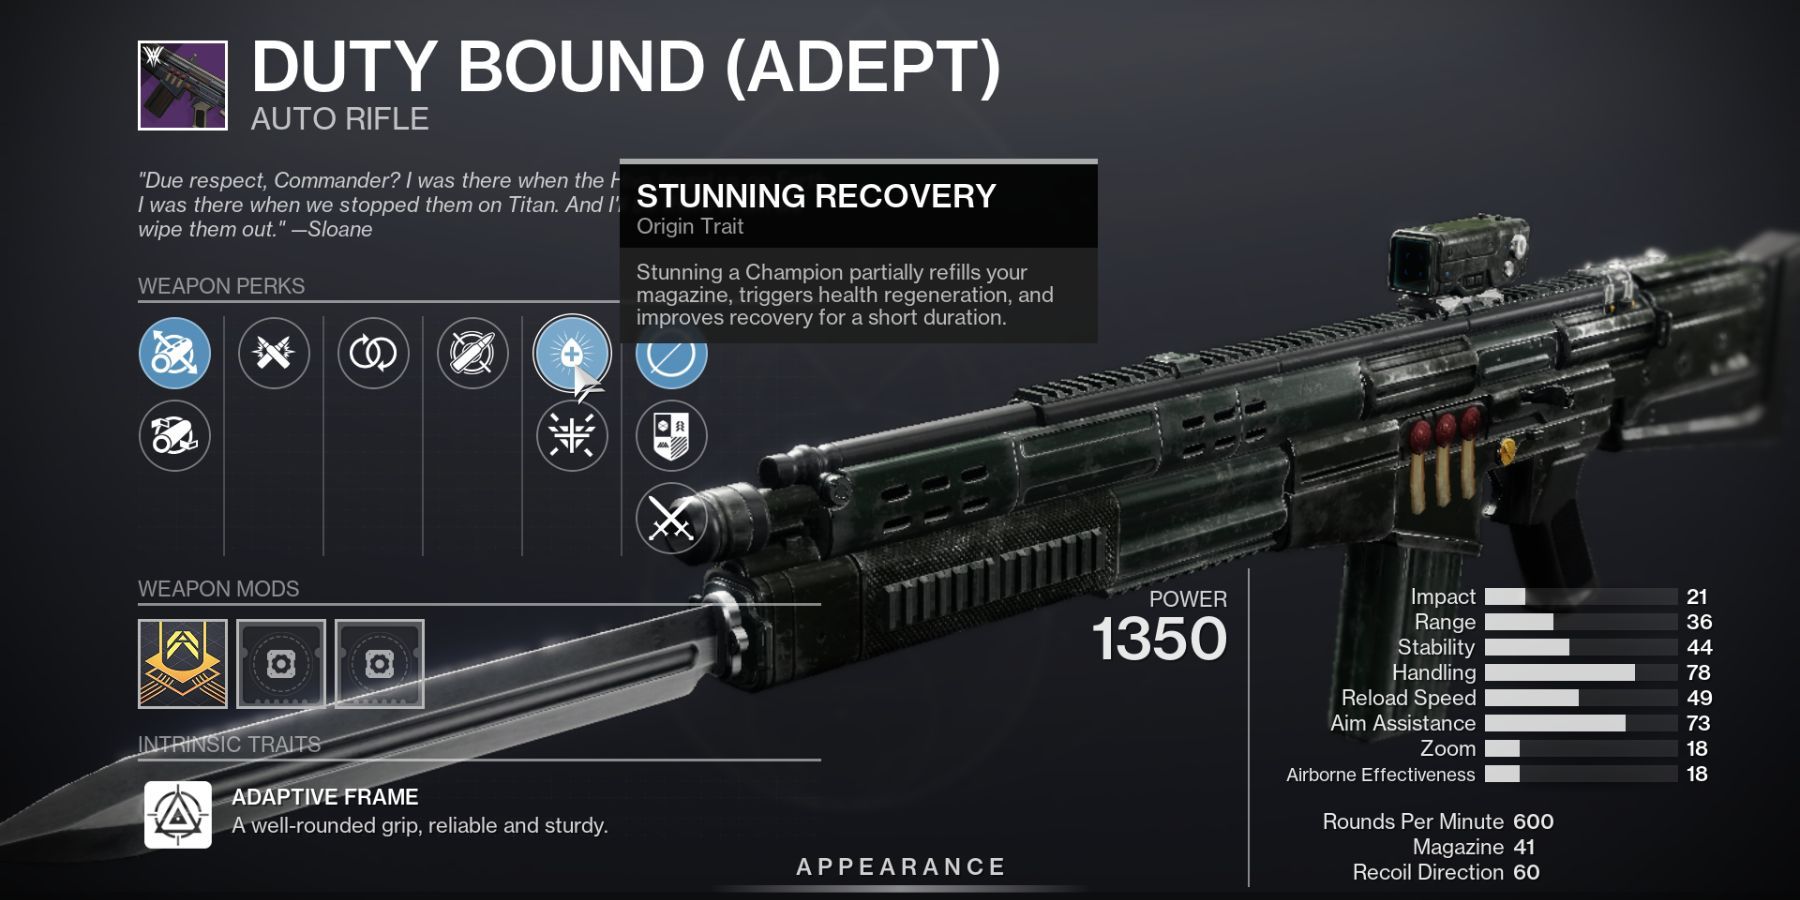 Destiny 2 Duty Bound Adept Auto Rifle